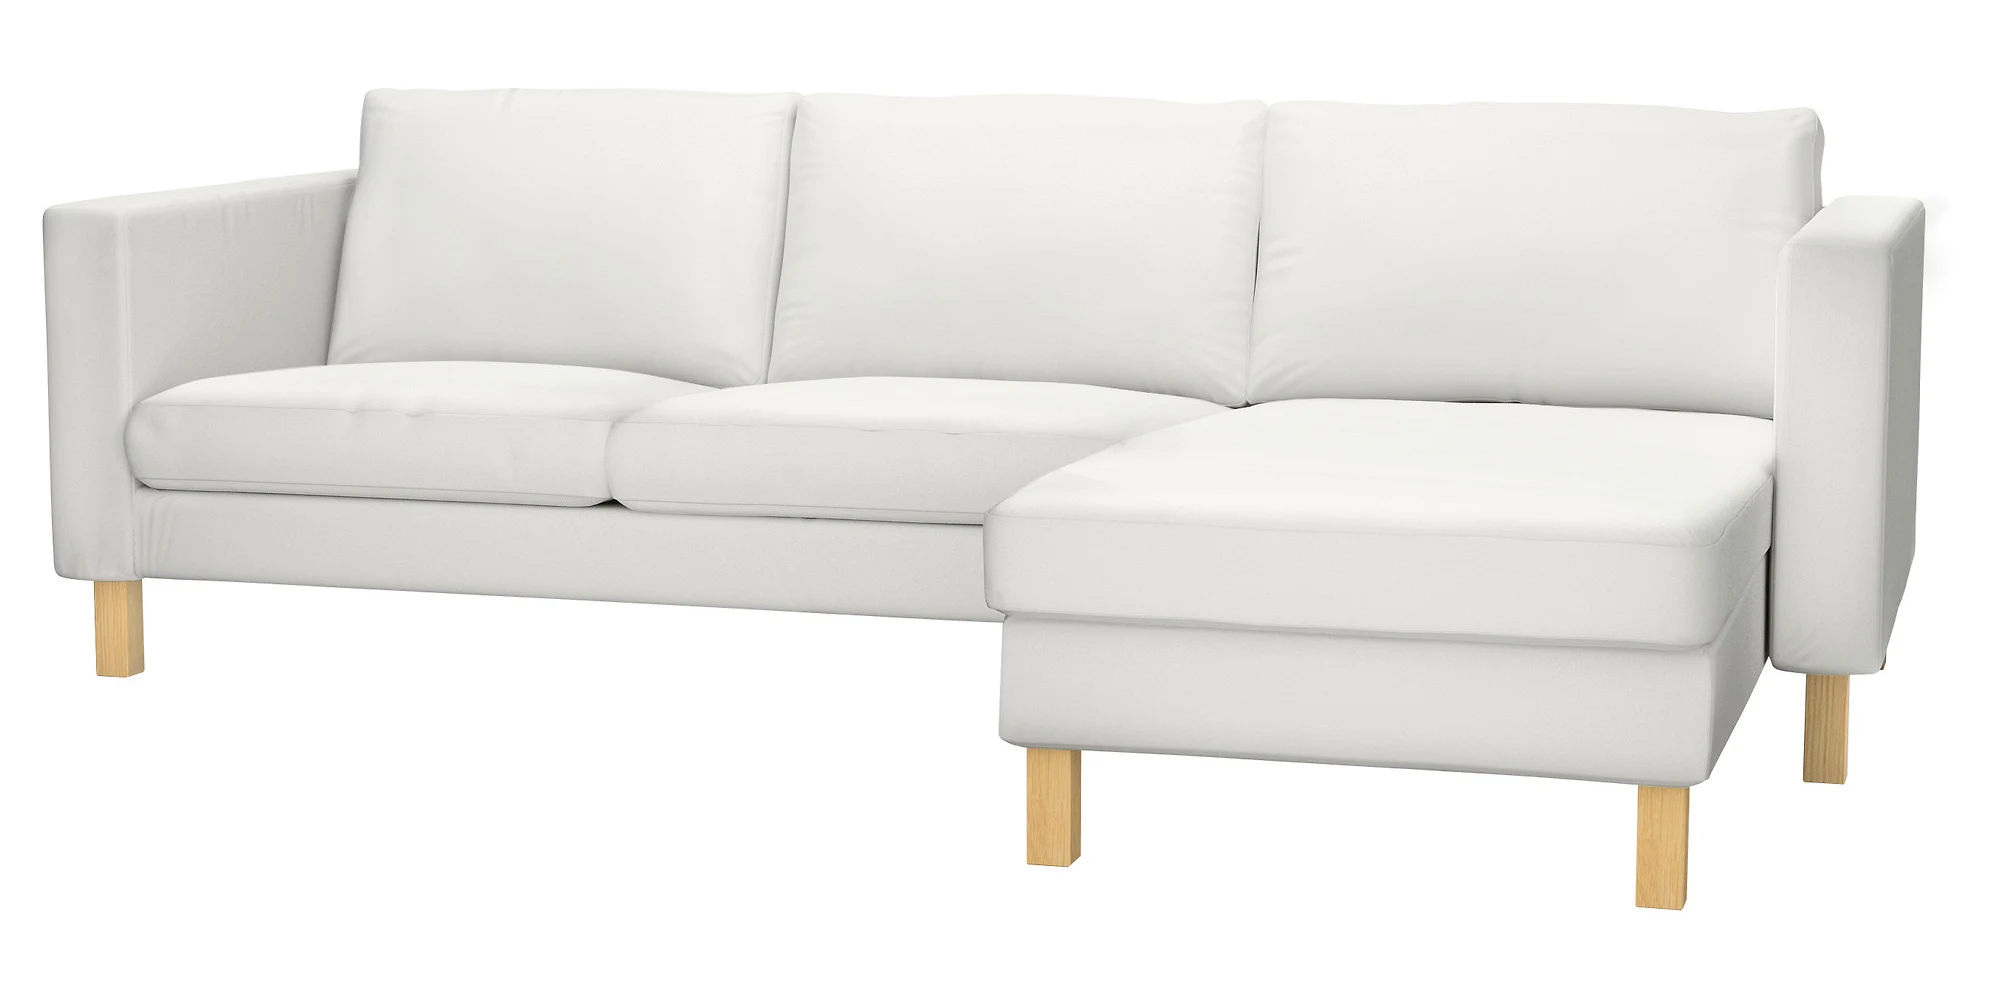 KARLSTAD Sofa from Ikea